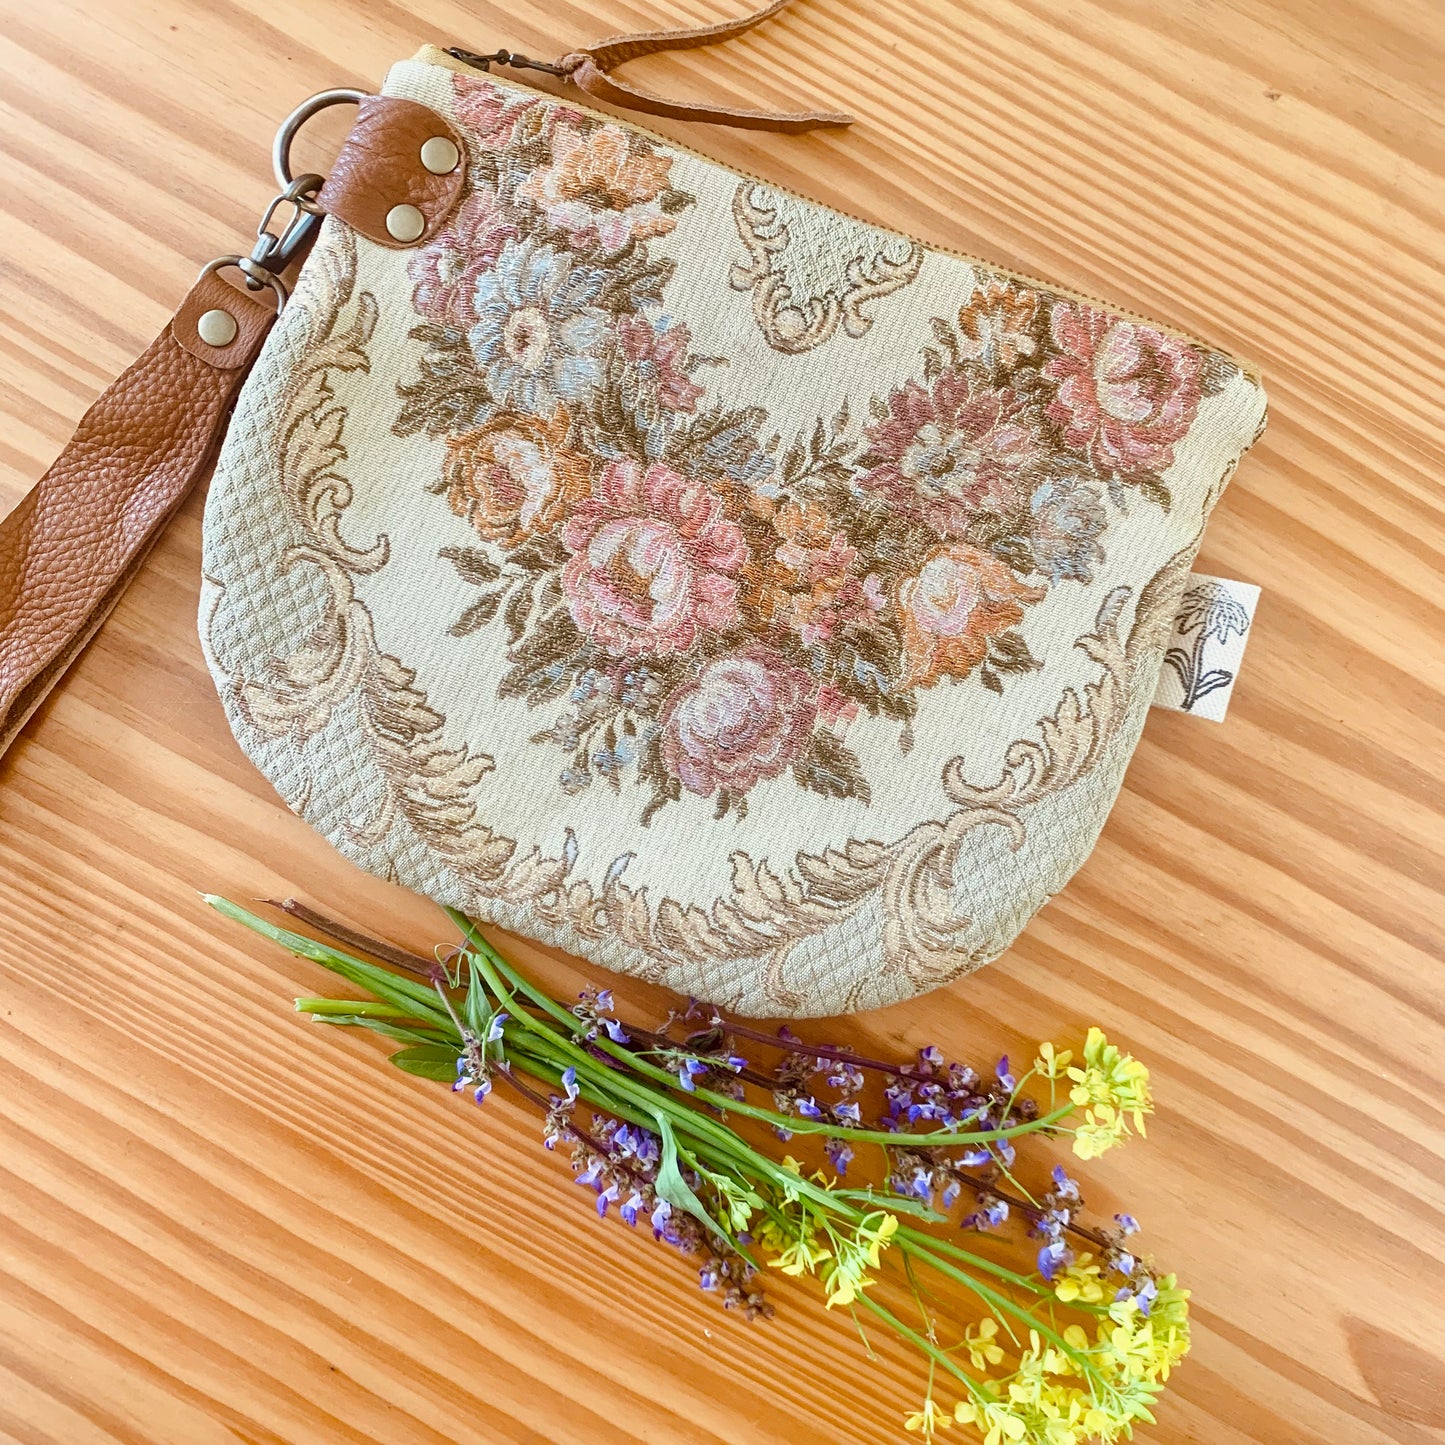 Vintage rose tapestry clutch purse